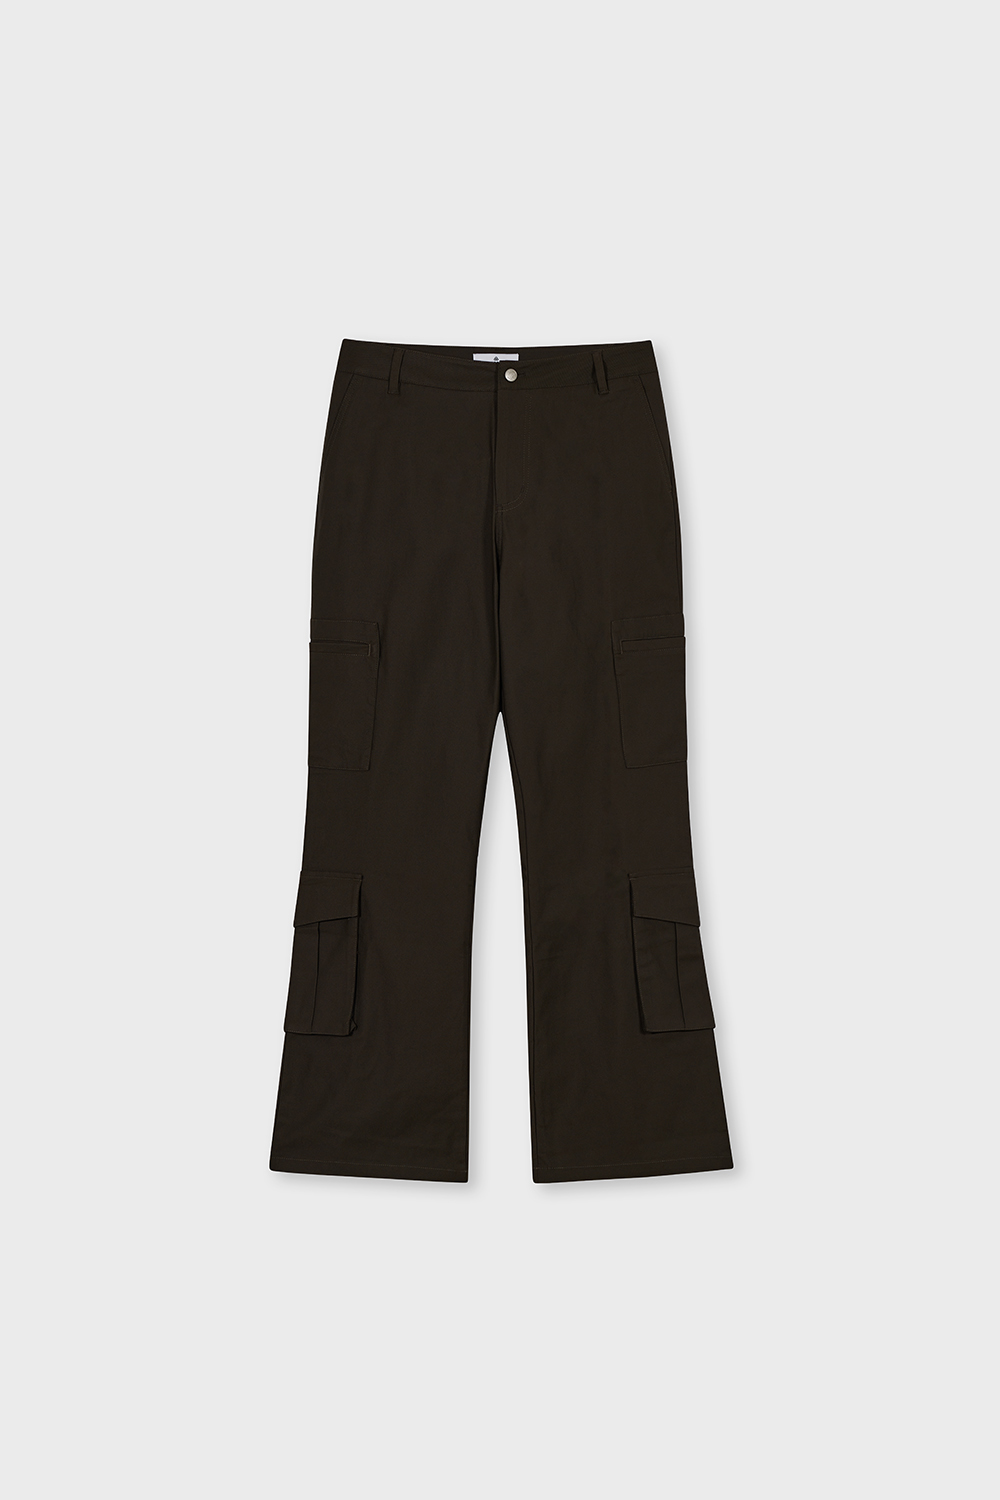 DIG 8-Pocket Cargo Pants (Dark Brown)